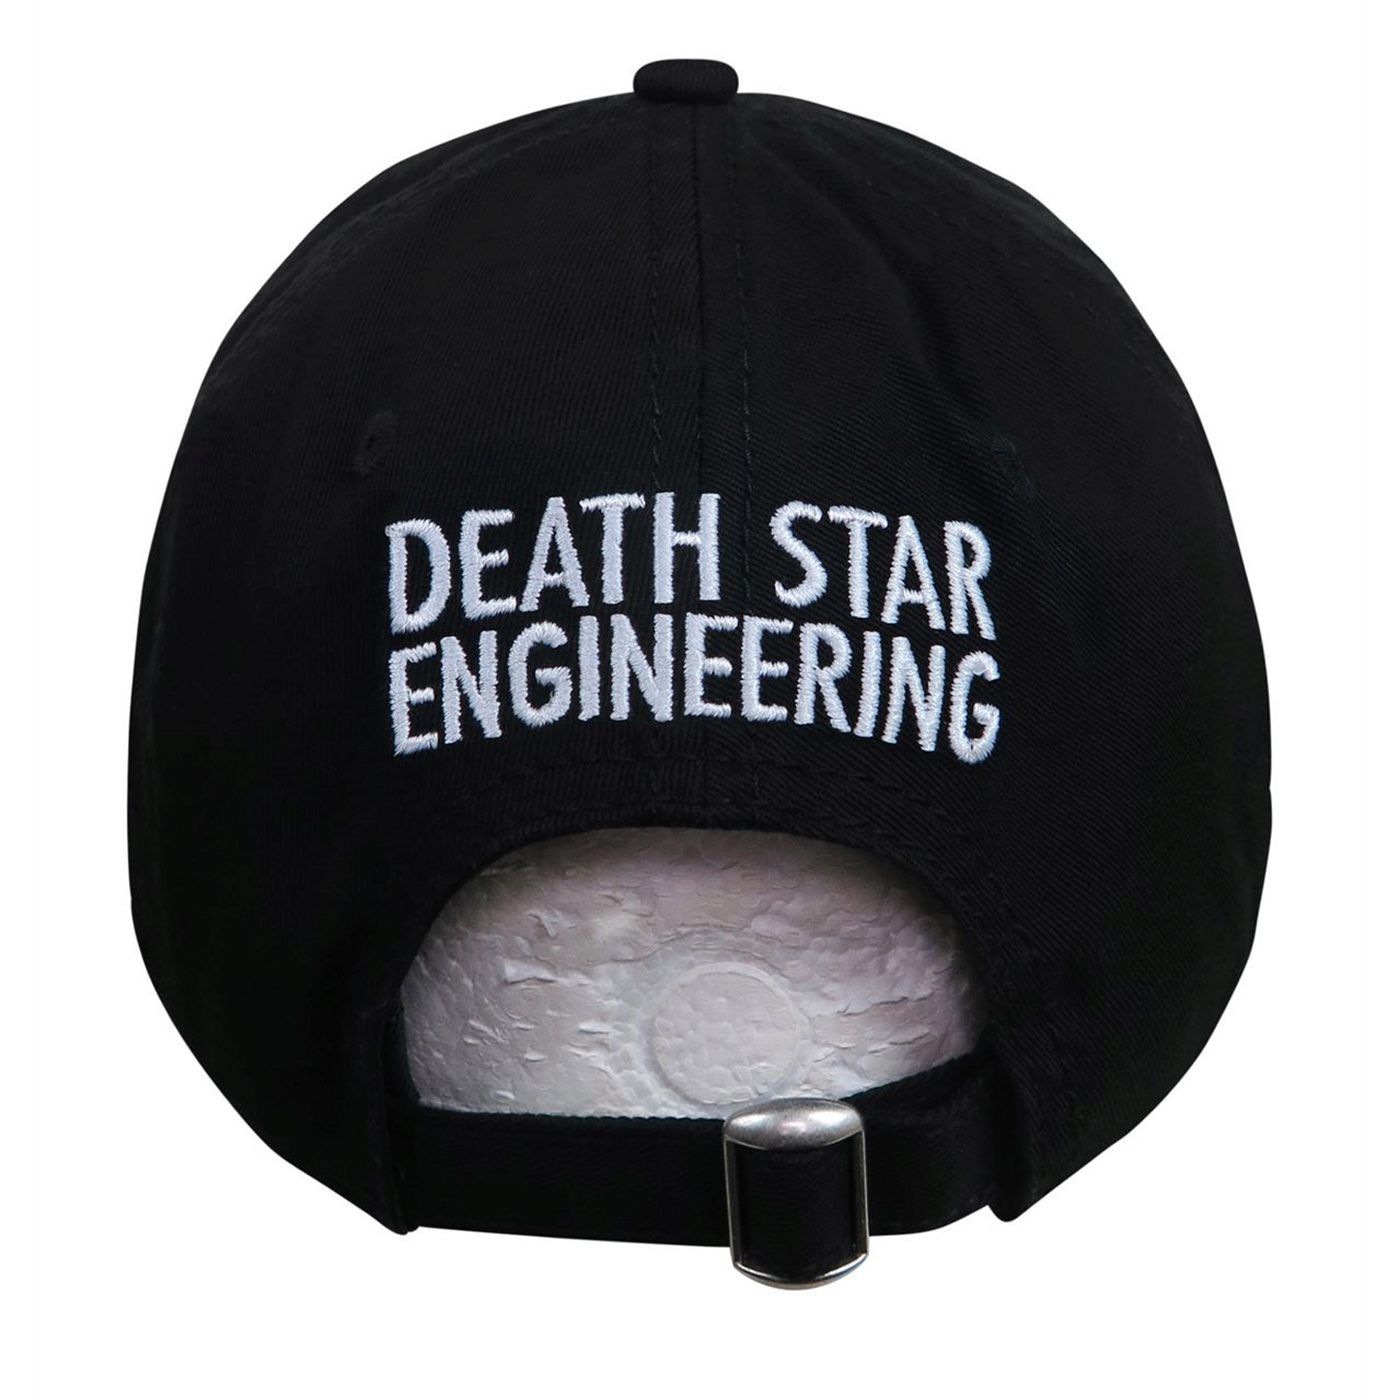 Star Wars Empire Symbol 9Twenty Adjustable Hat